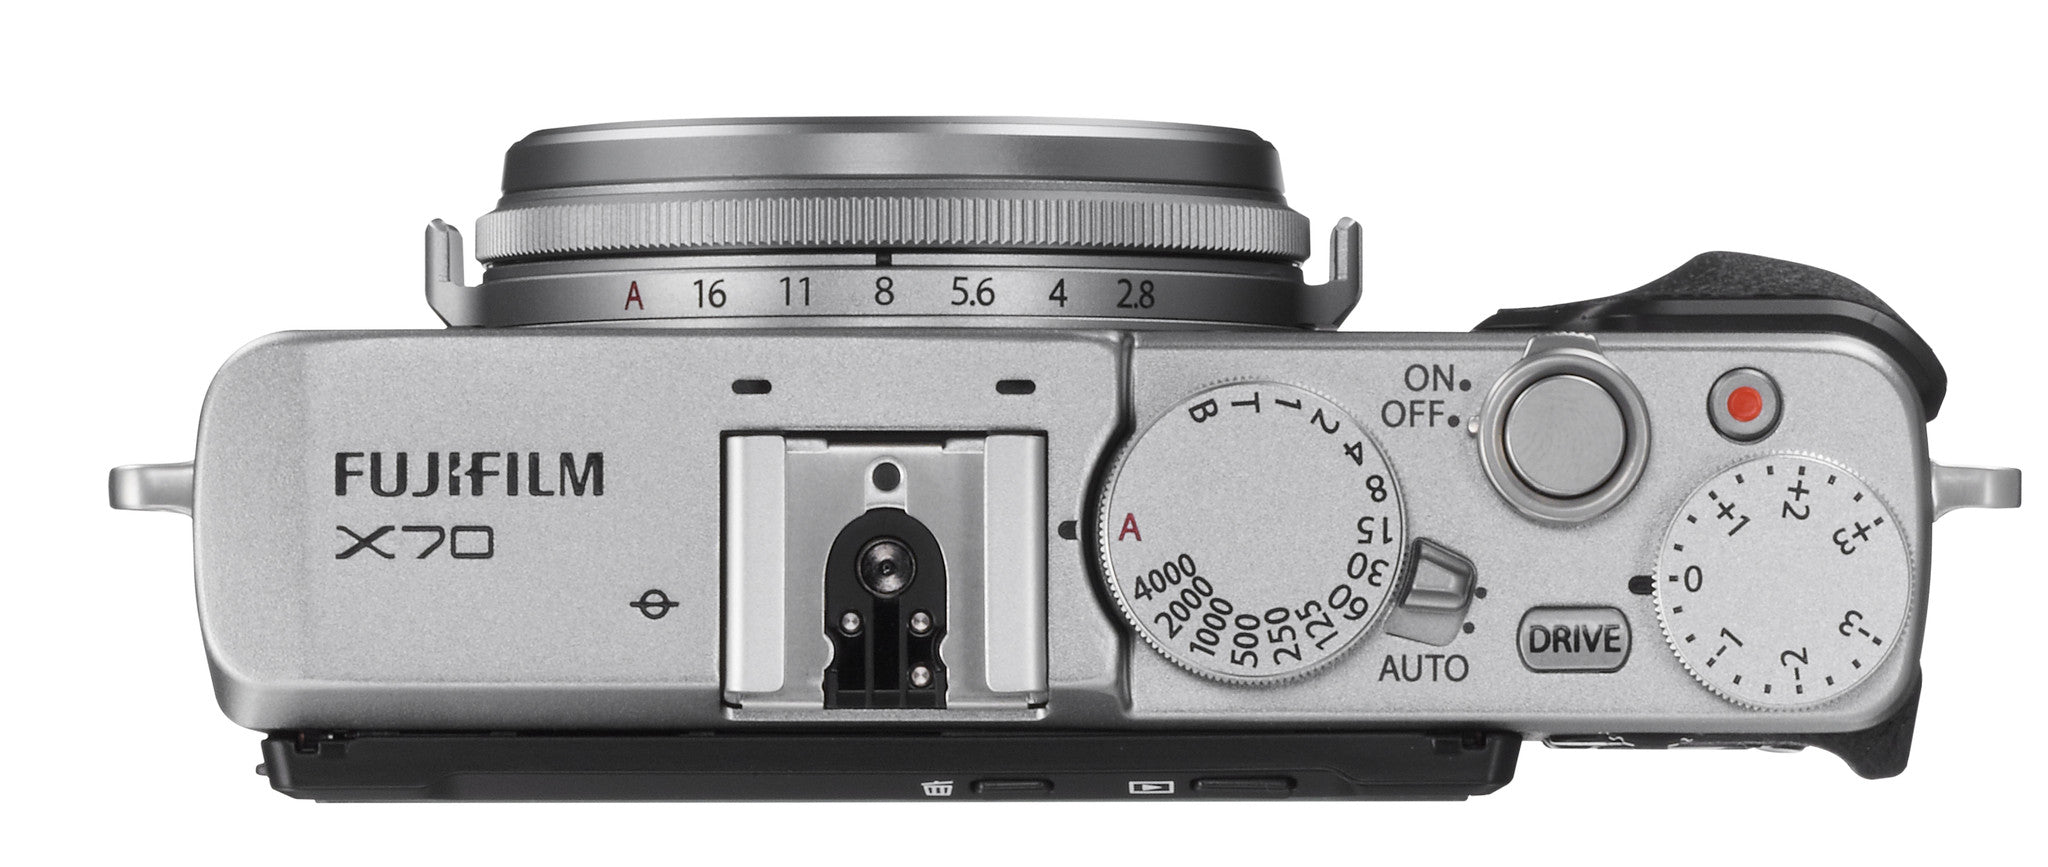 Fujifilm X70 Digital Camera (Silver), camera point & shoot cameras, Fujifilm - Pictureline  - 5